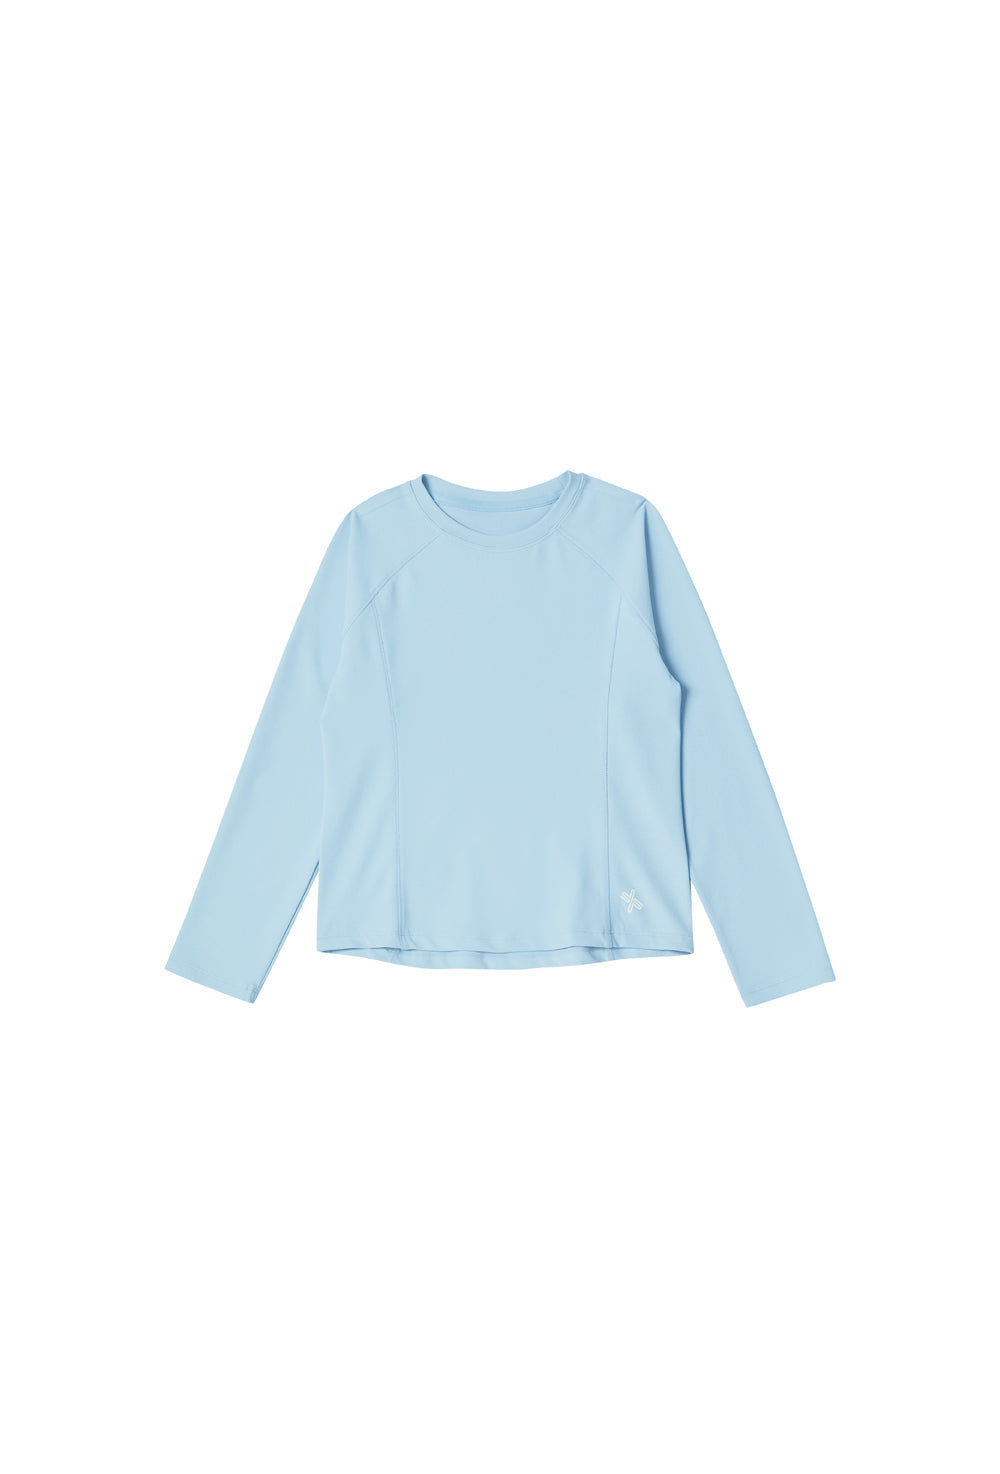 XEXYMIX Kids Princess Active T-Shirt - Cirrus Blue